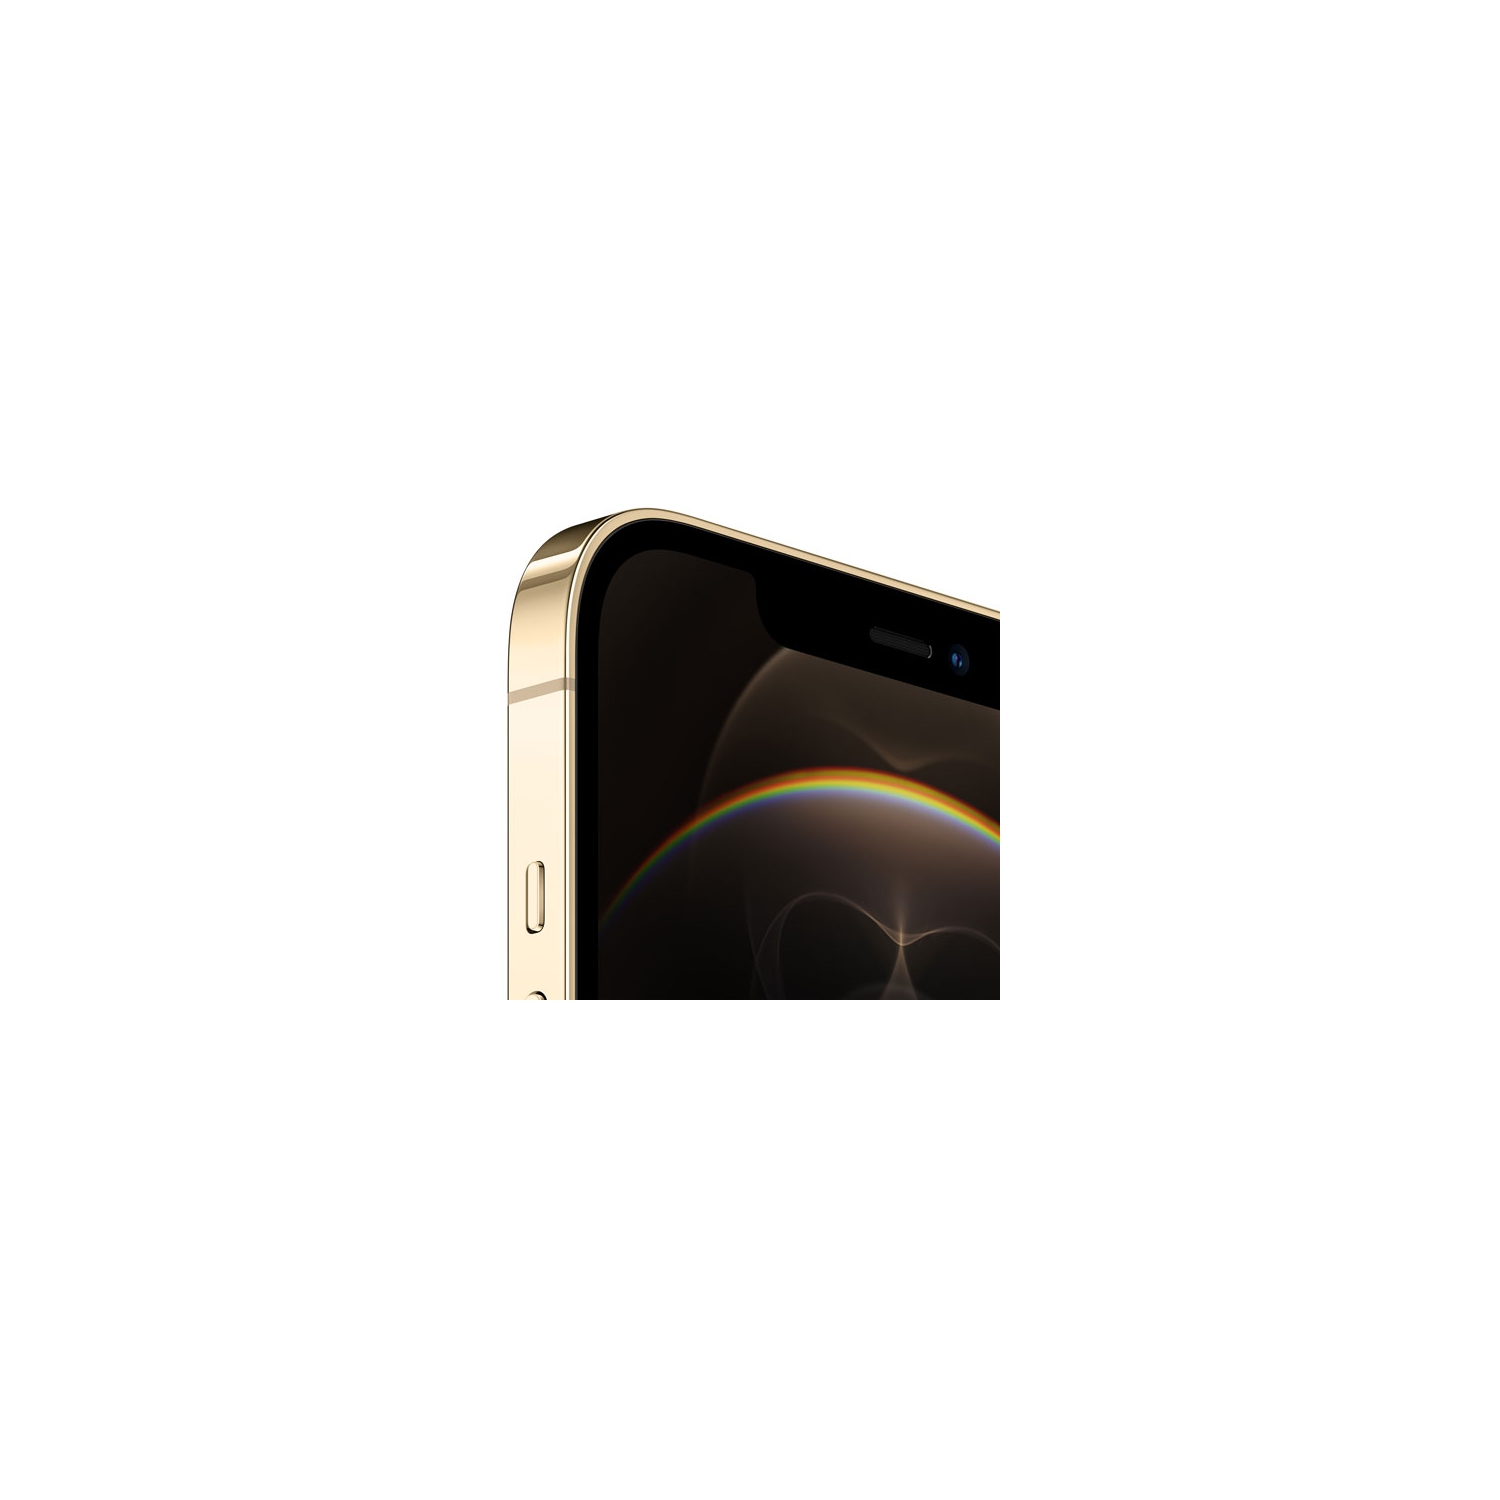 Apple iPhone 12 Pro Max 128GB Smartphone - Gold - Unlocked - New 